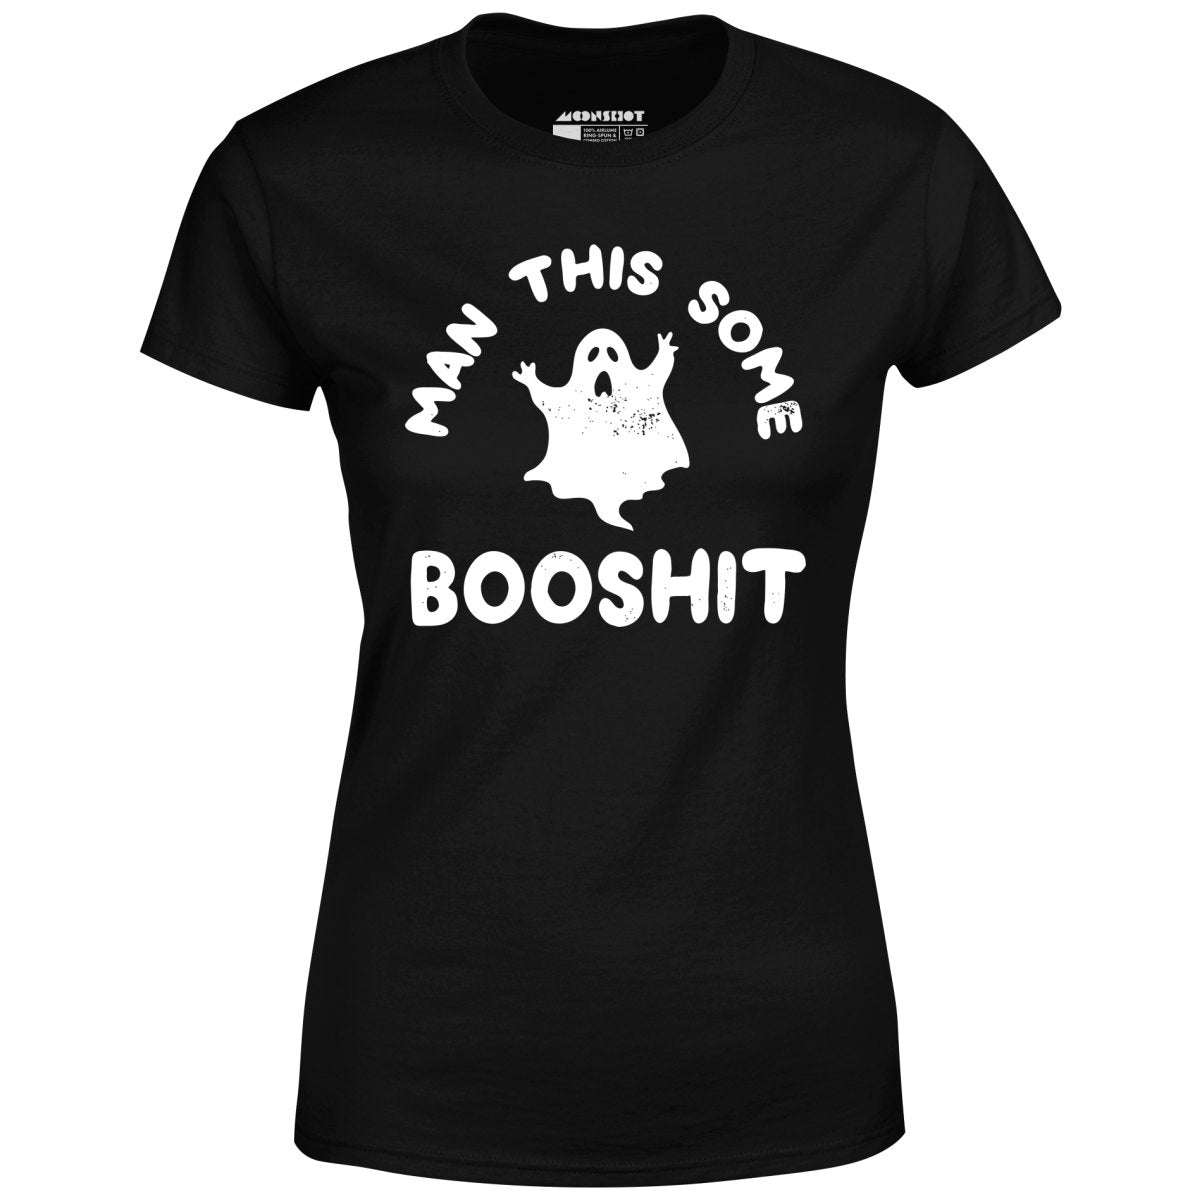 Man This Some Booshit - Women's T-Shirt